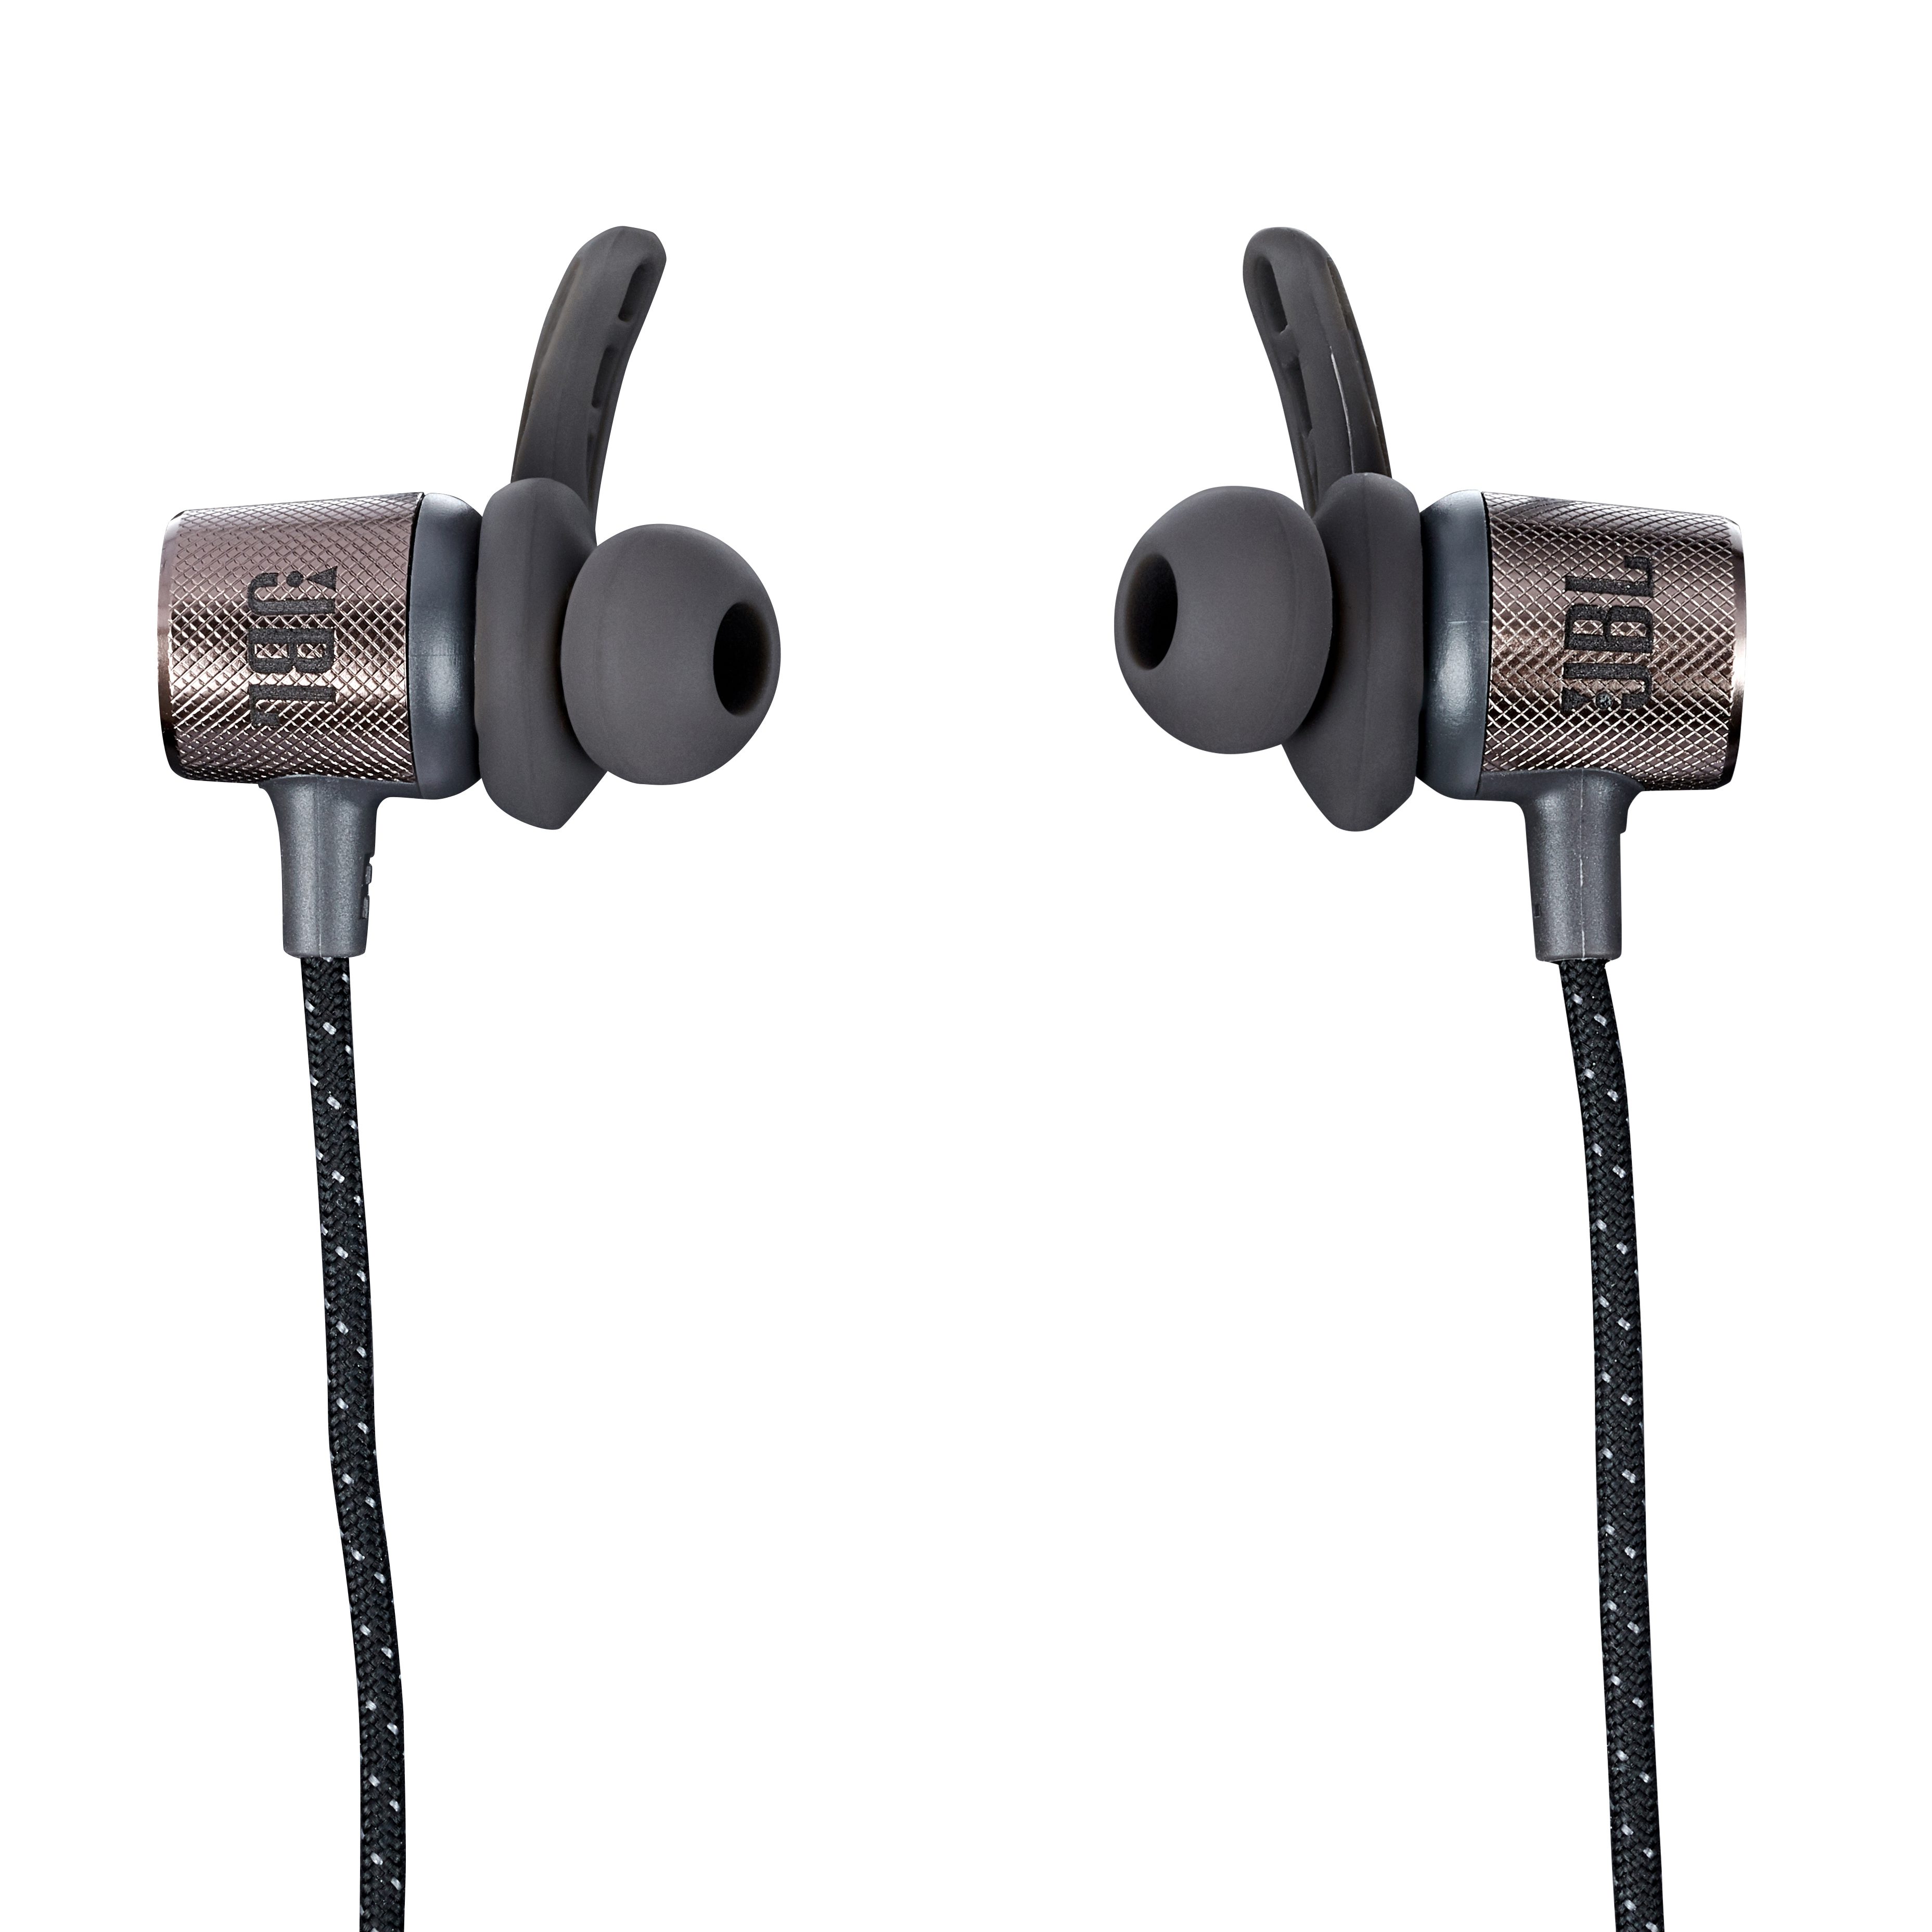 ua jbl headphones review